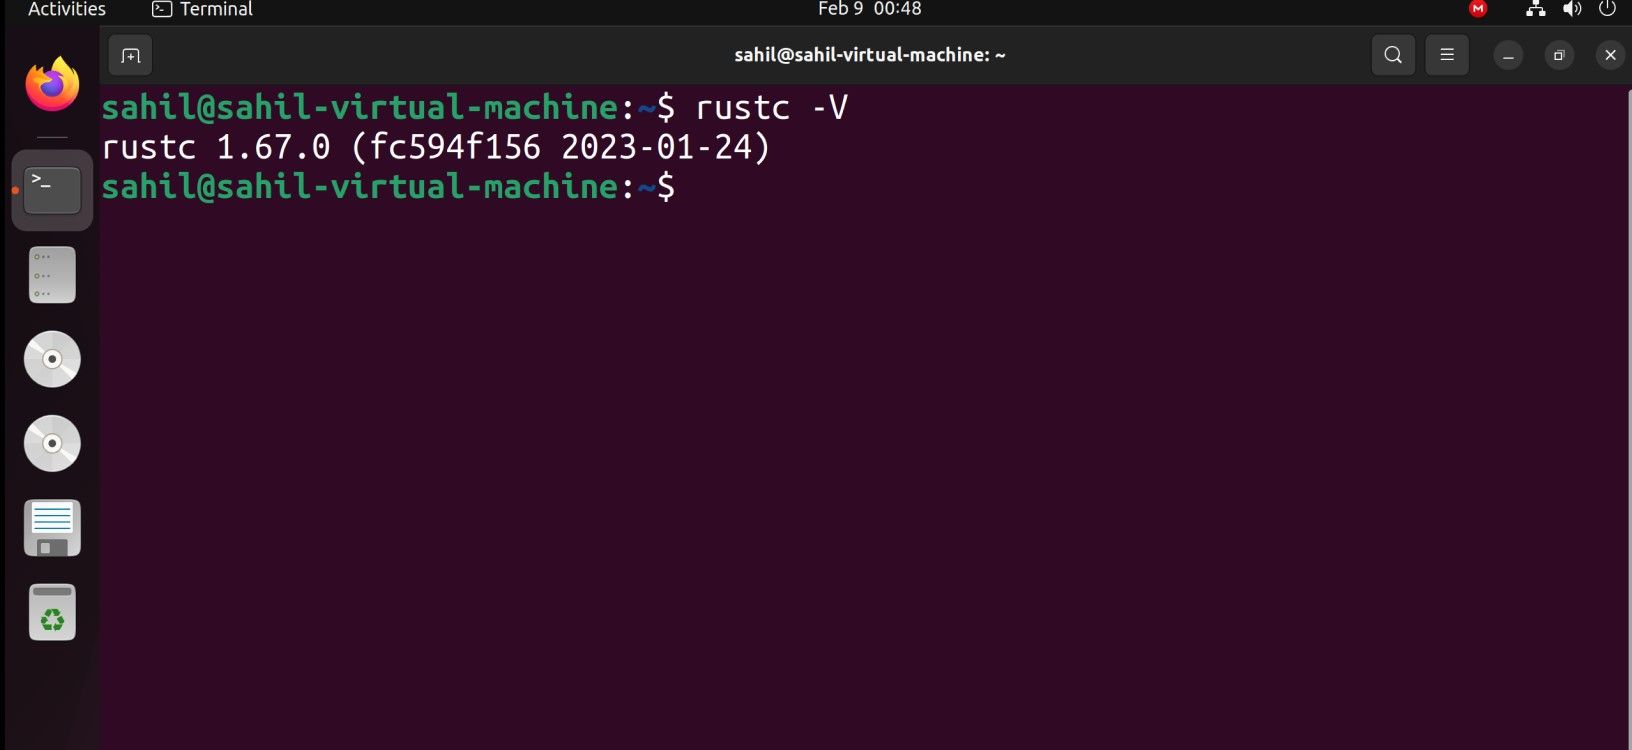 Version number on Ubuntu terminal window